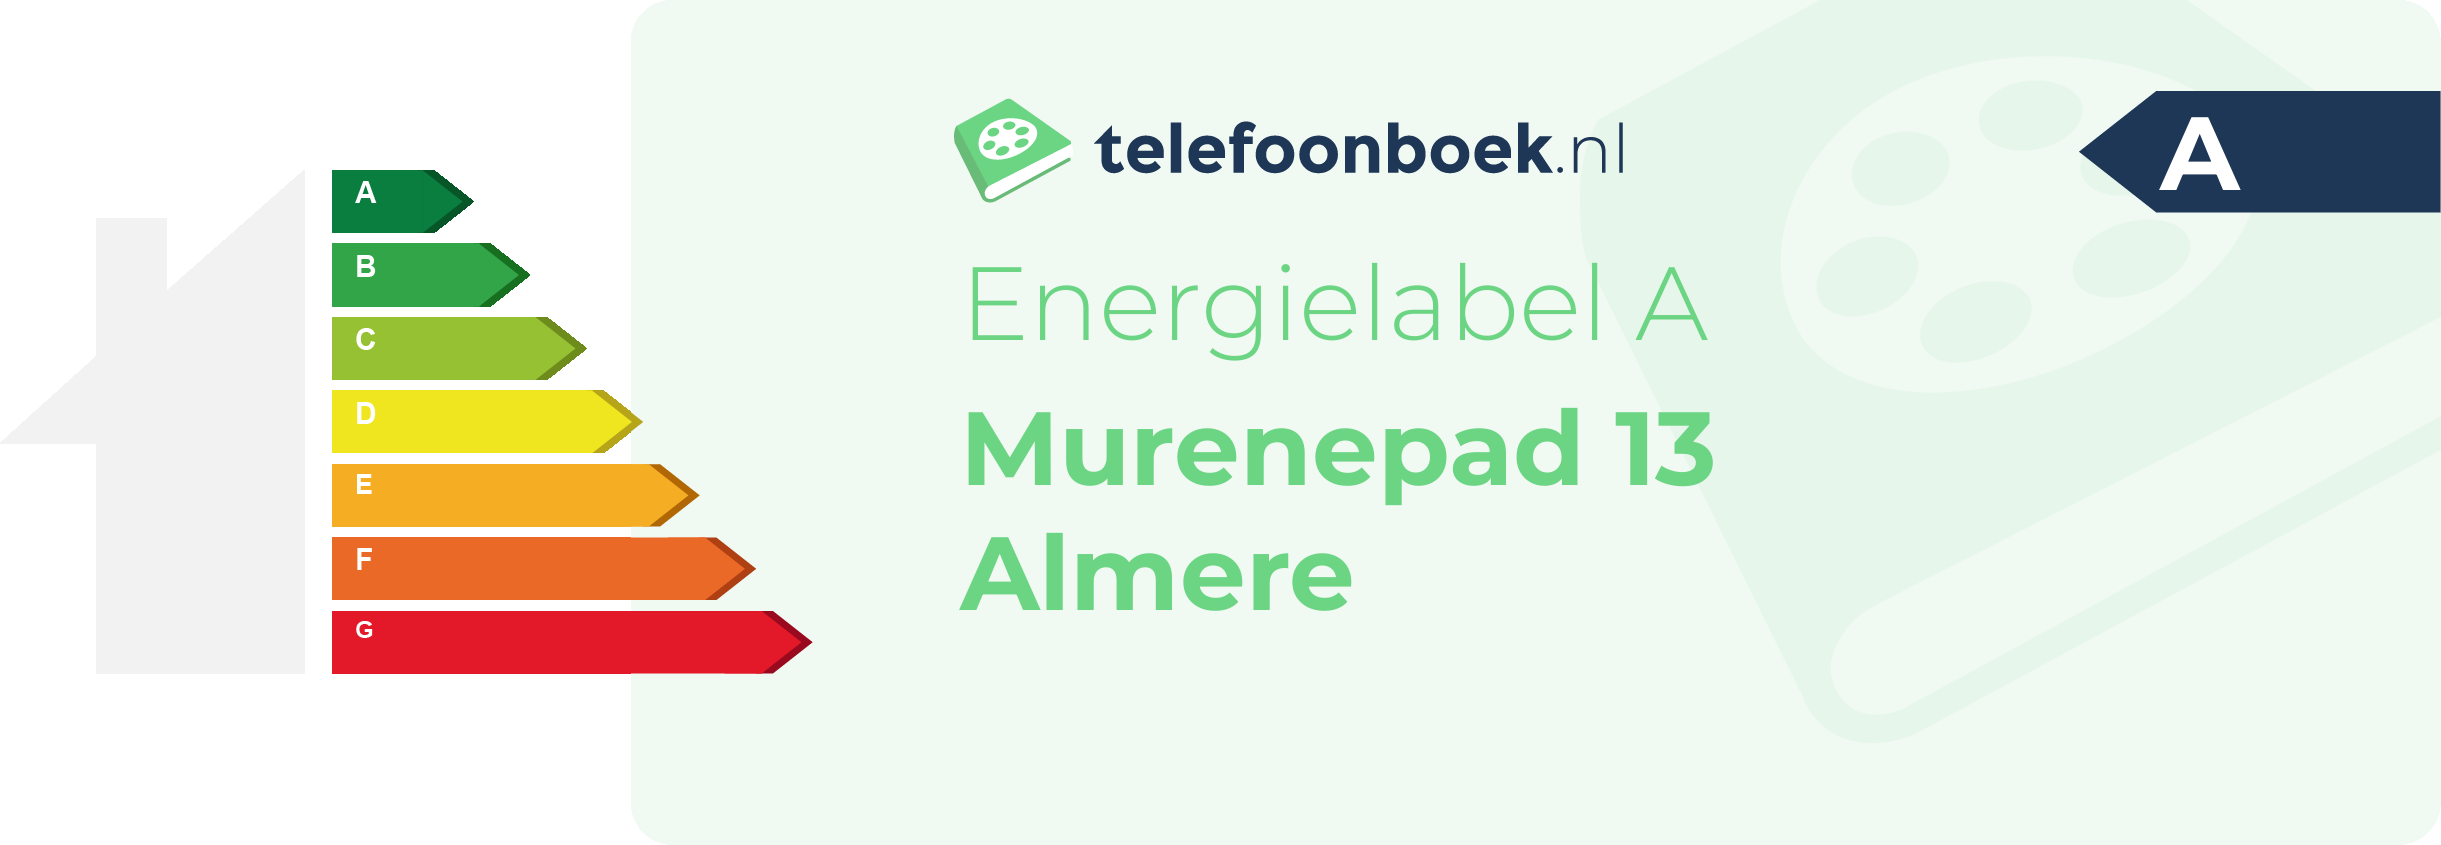 Energielabel Murenepad 13 Almere